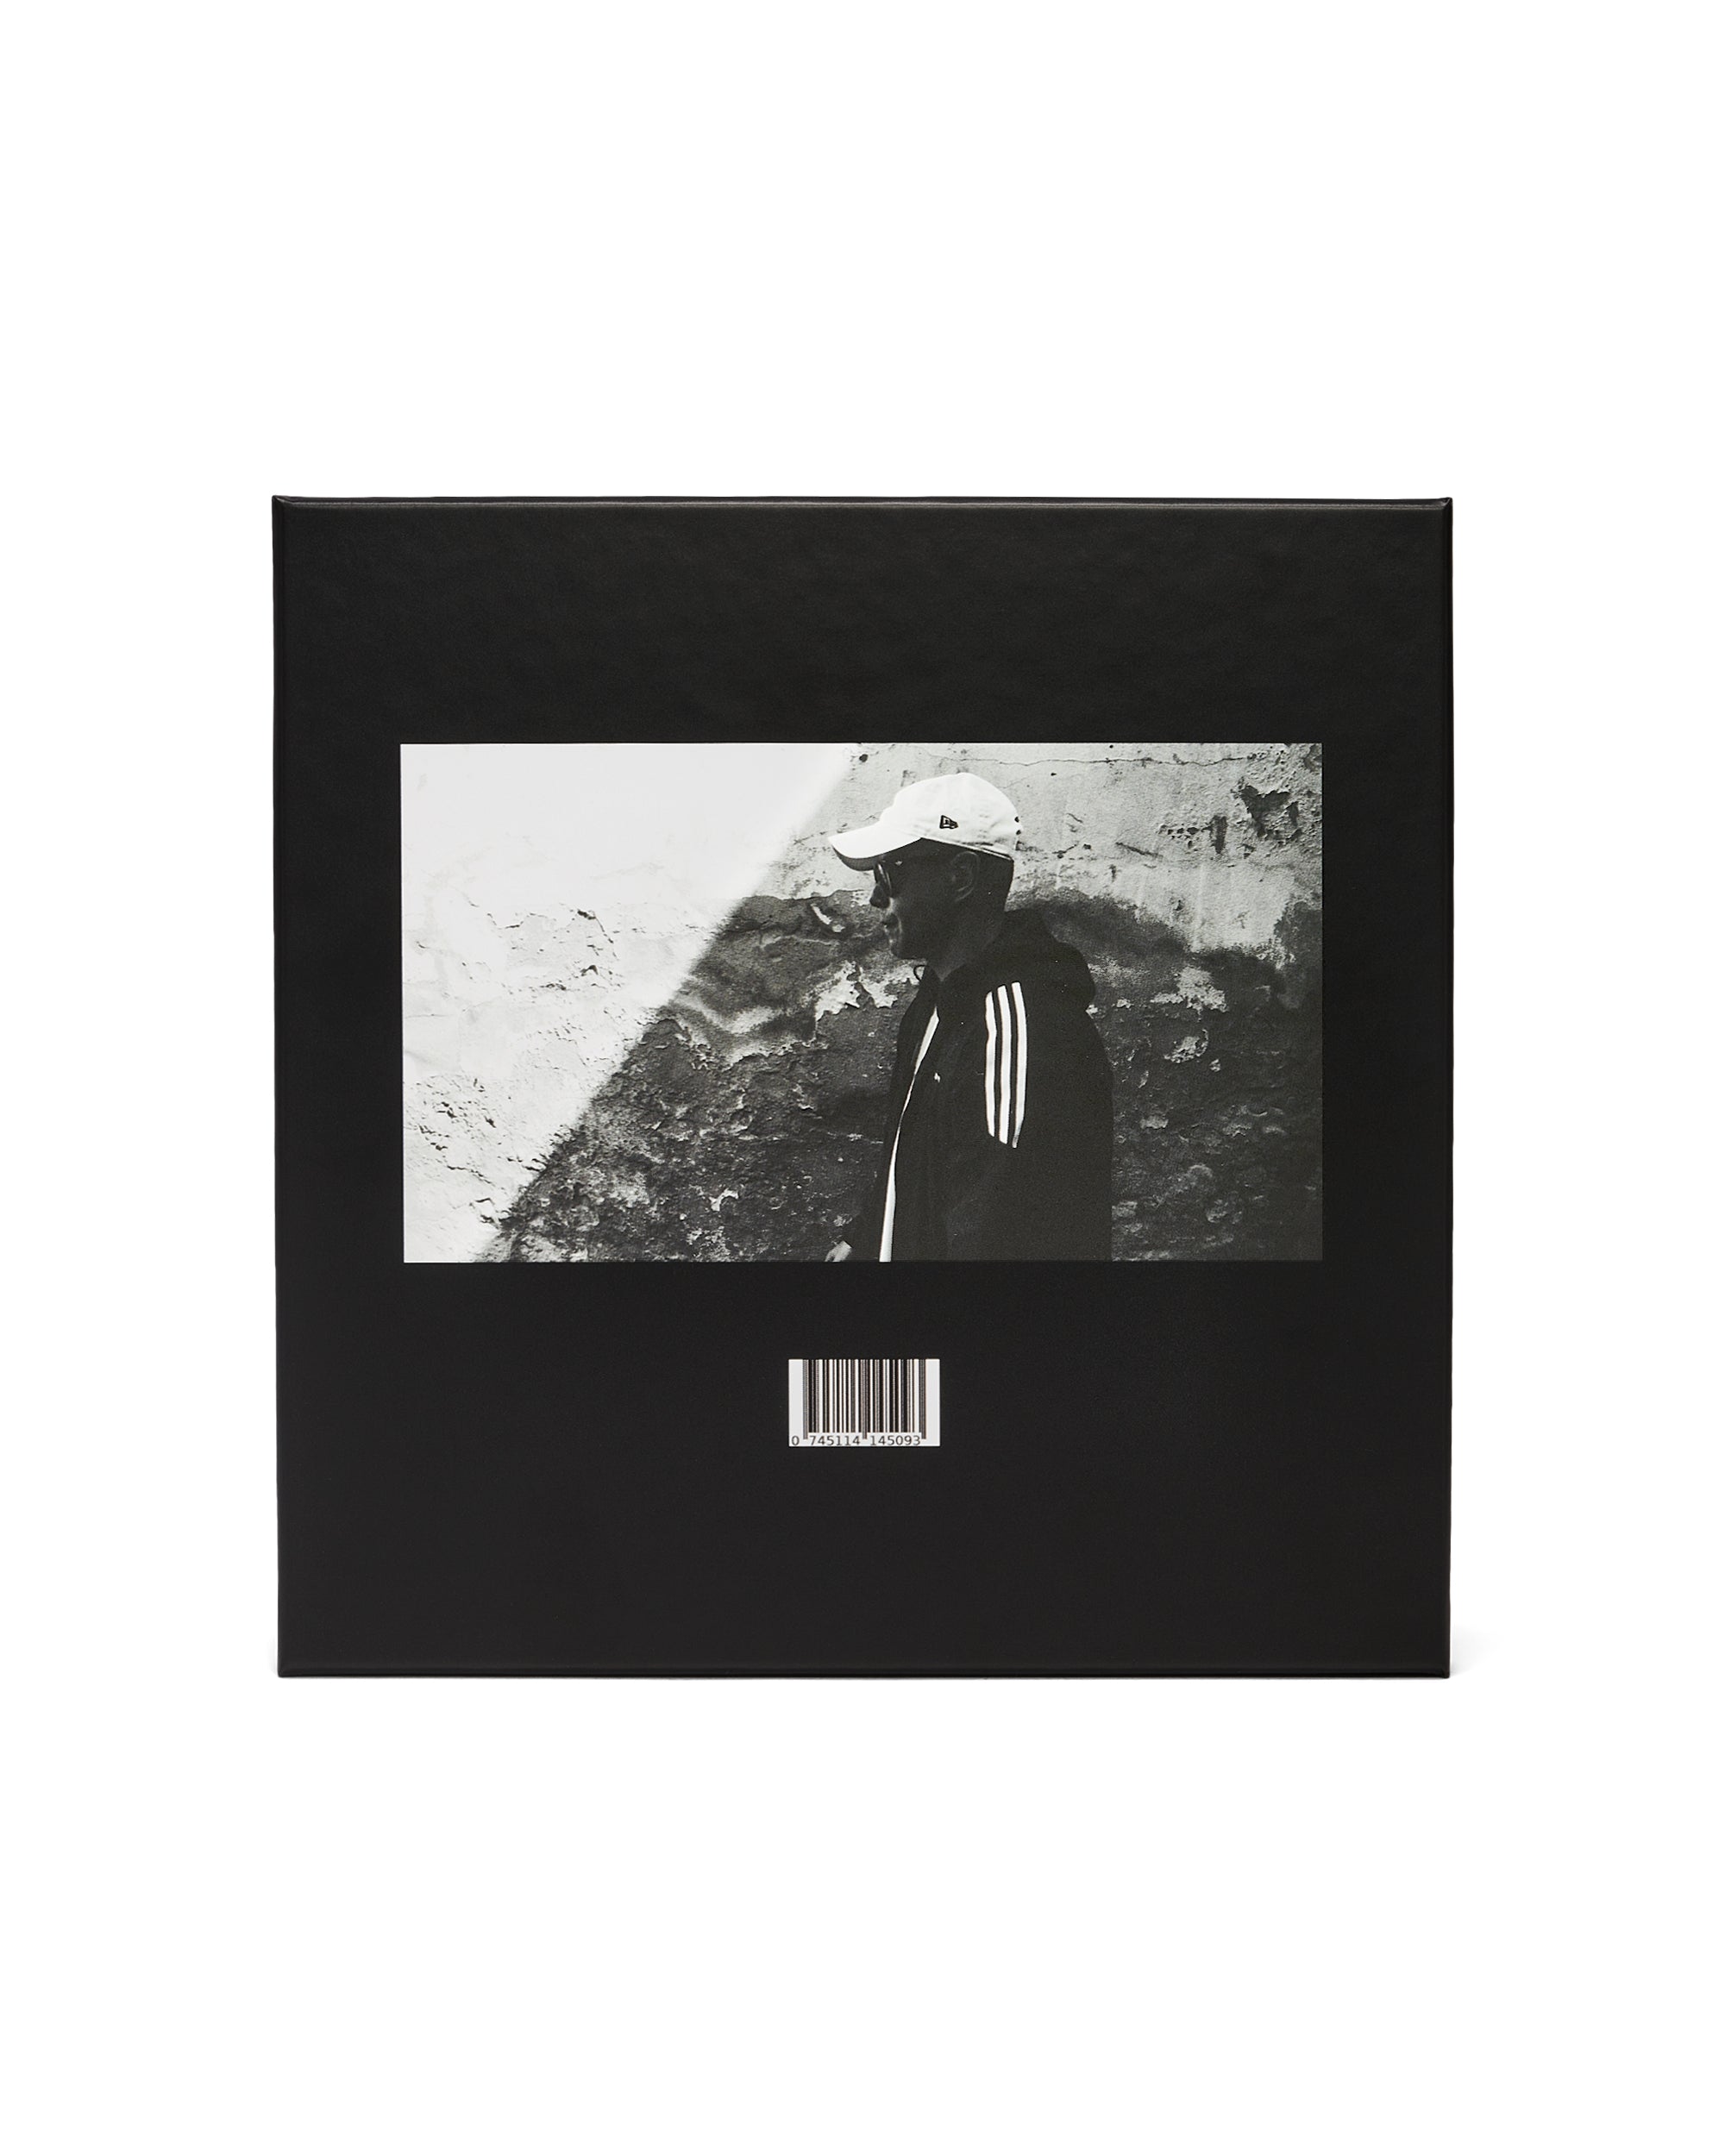 TRETTMANN – "#DIY" (ALBUM) 7″ BOX